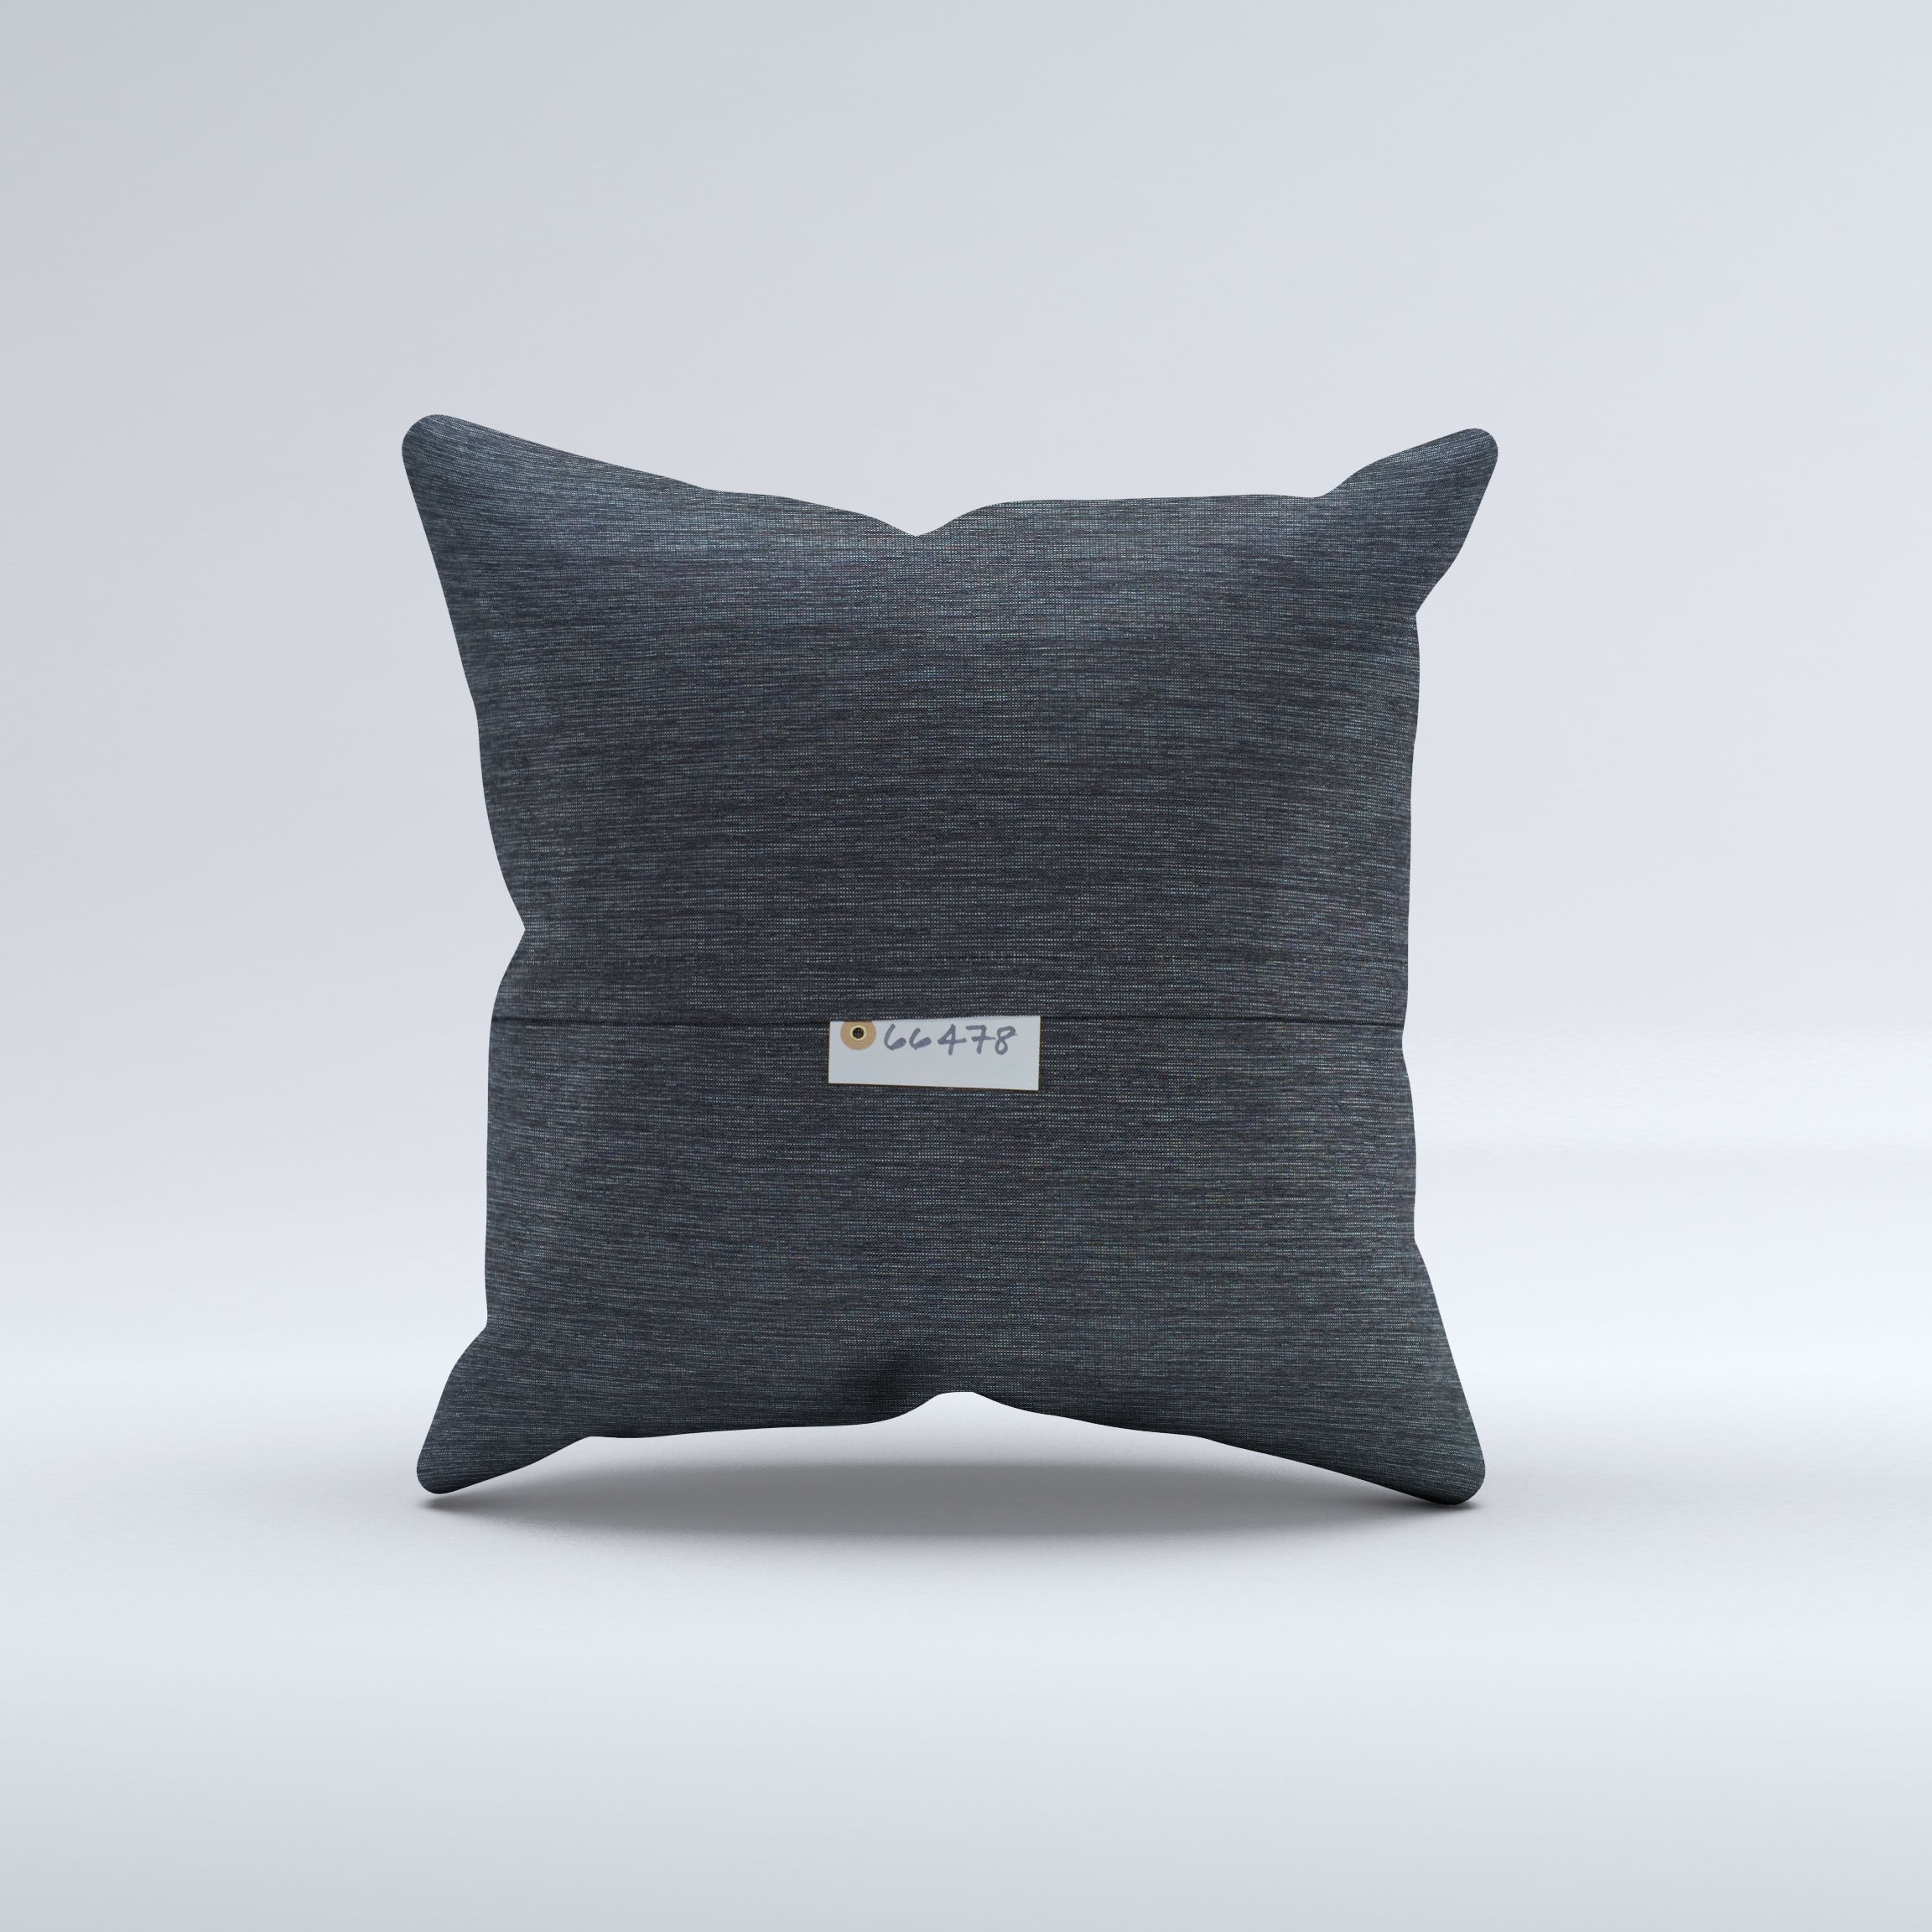 Vintage Turkish Kilim Cushion Cover 60x60 cm Square Wool Large Pillowcase 66478